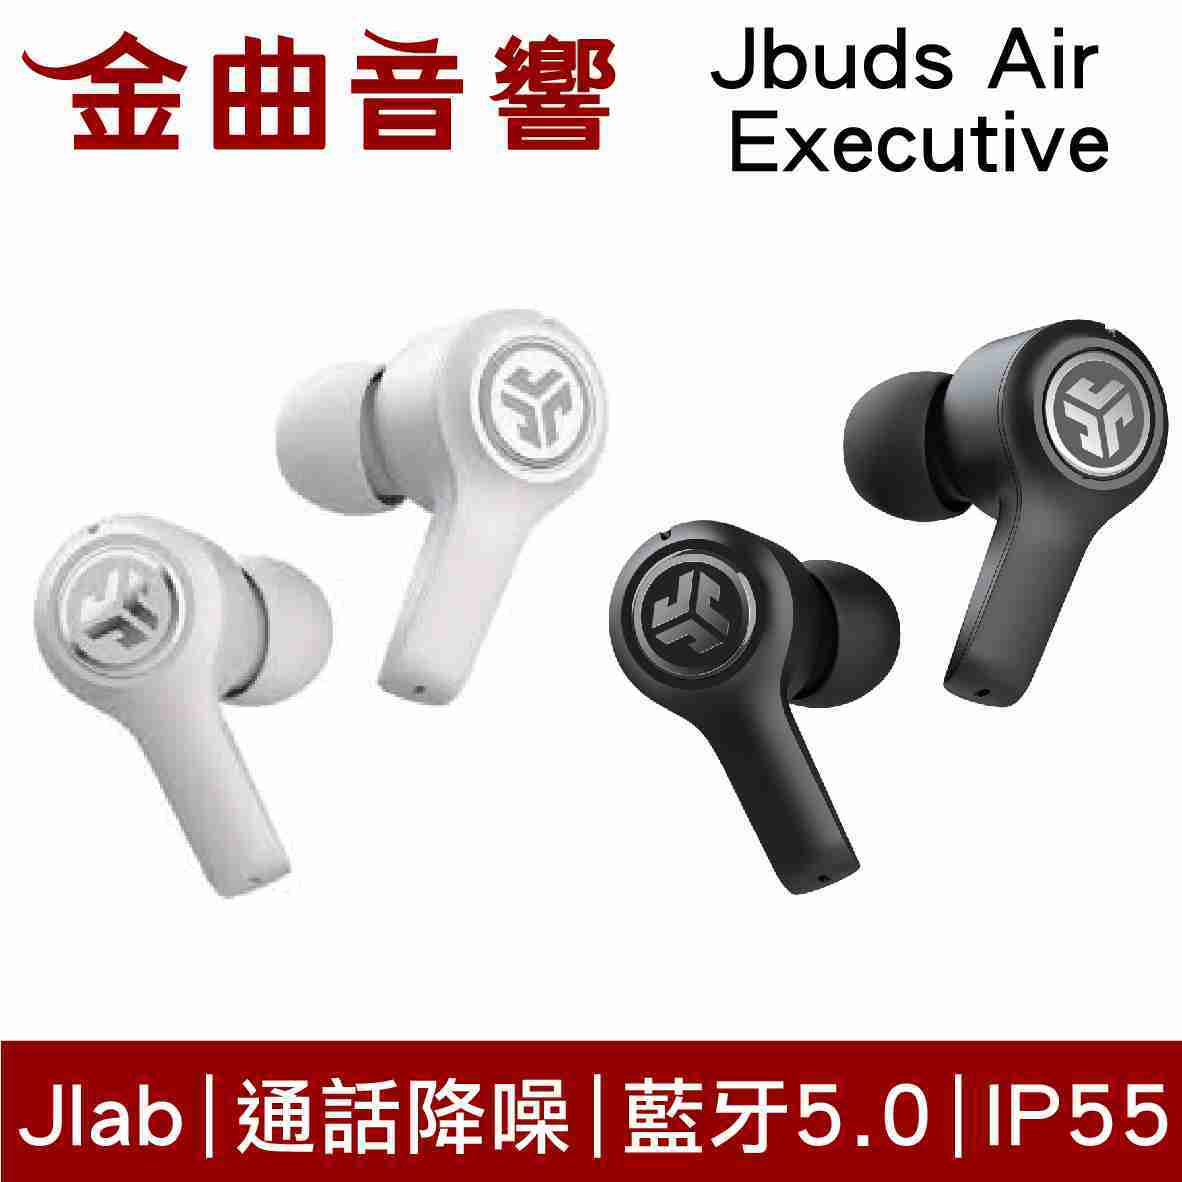 JLab Jbuds Air Executive 黑色 真無線 藍芽耳機 | 金曲音響